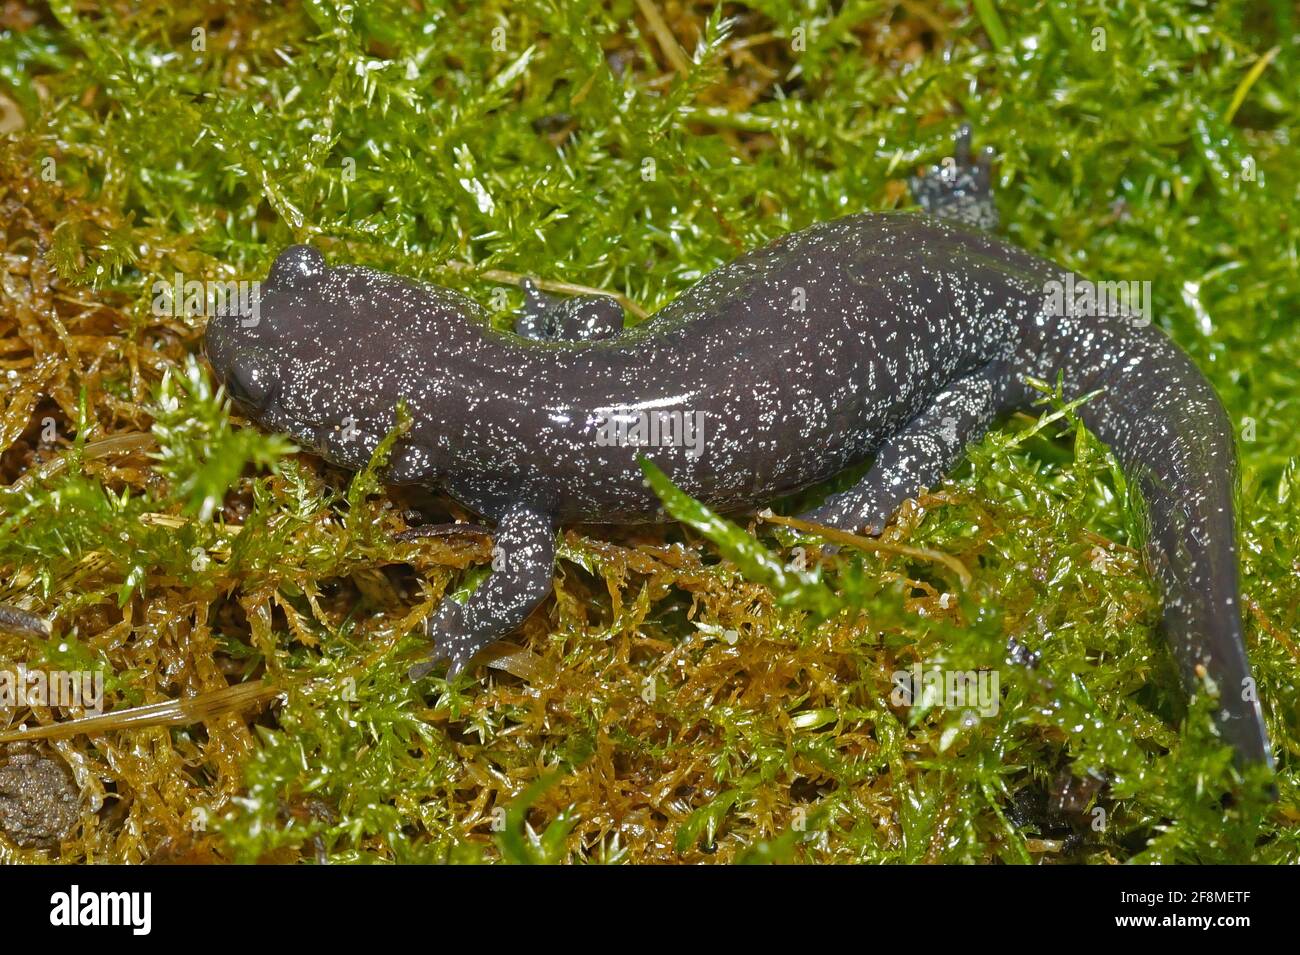 Closeup of a juvenile white speckled Japanese streamside salamander on the grass (Hynobius hirosei) Stock Photo